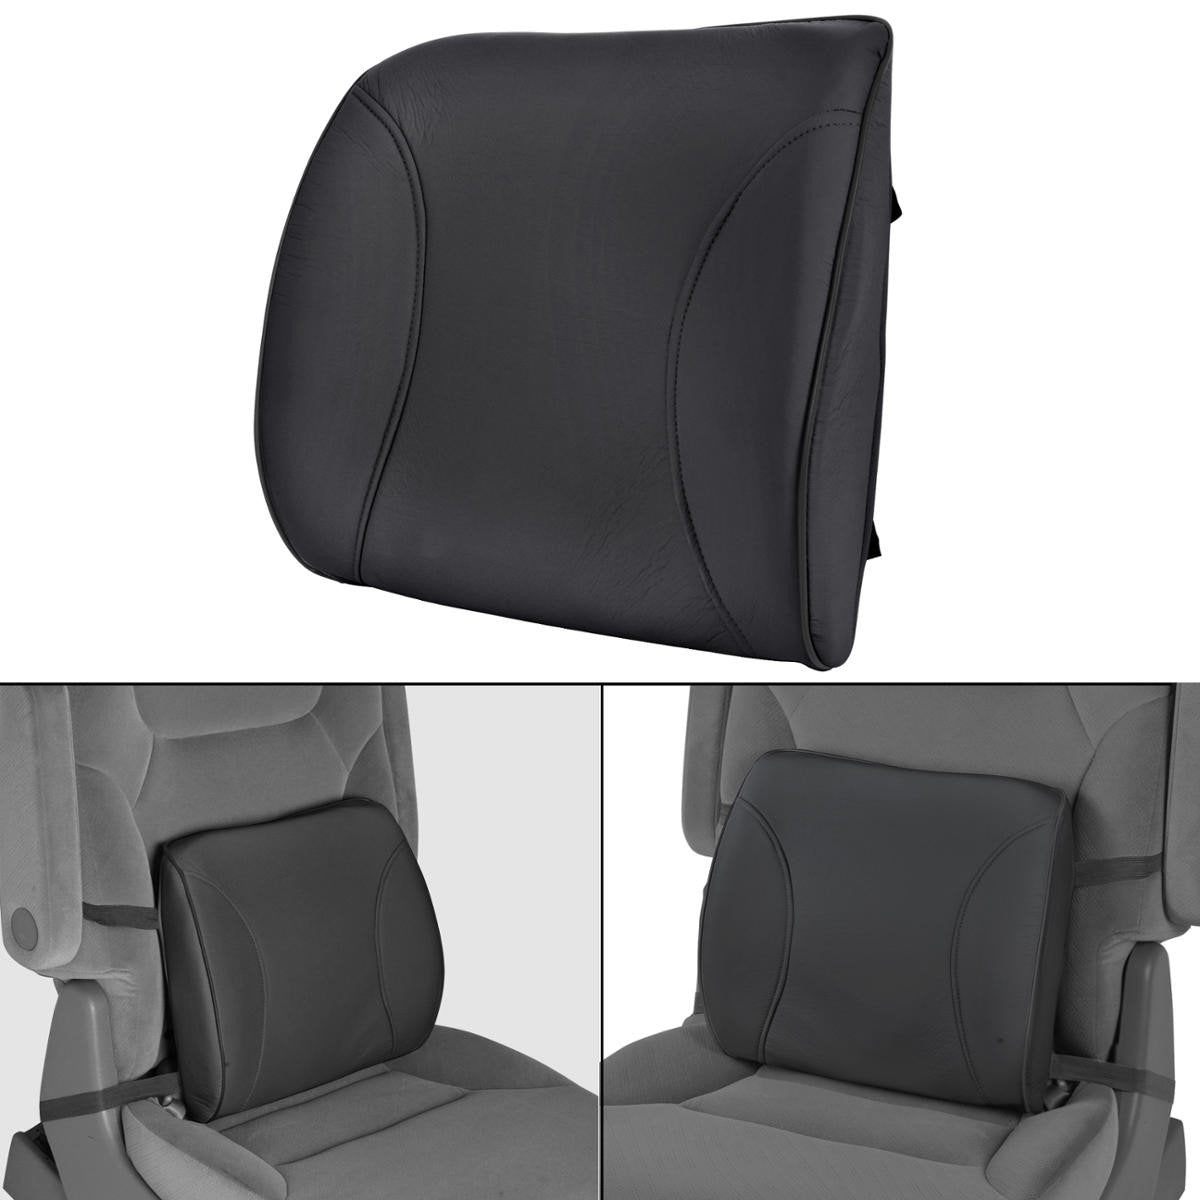 BDK BS-300-BK Durable Foam Lumbar Support 3D Balanced Firmness Cushion-Lower Back Pain Relief-Best for Office Chair, Car Seat, Recliner, Black